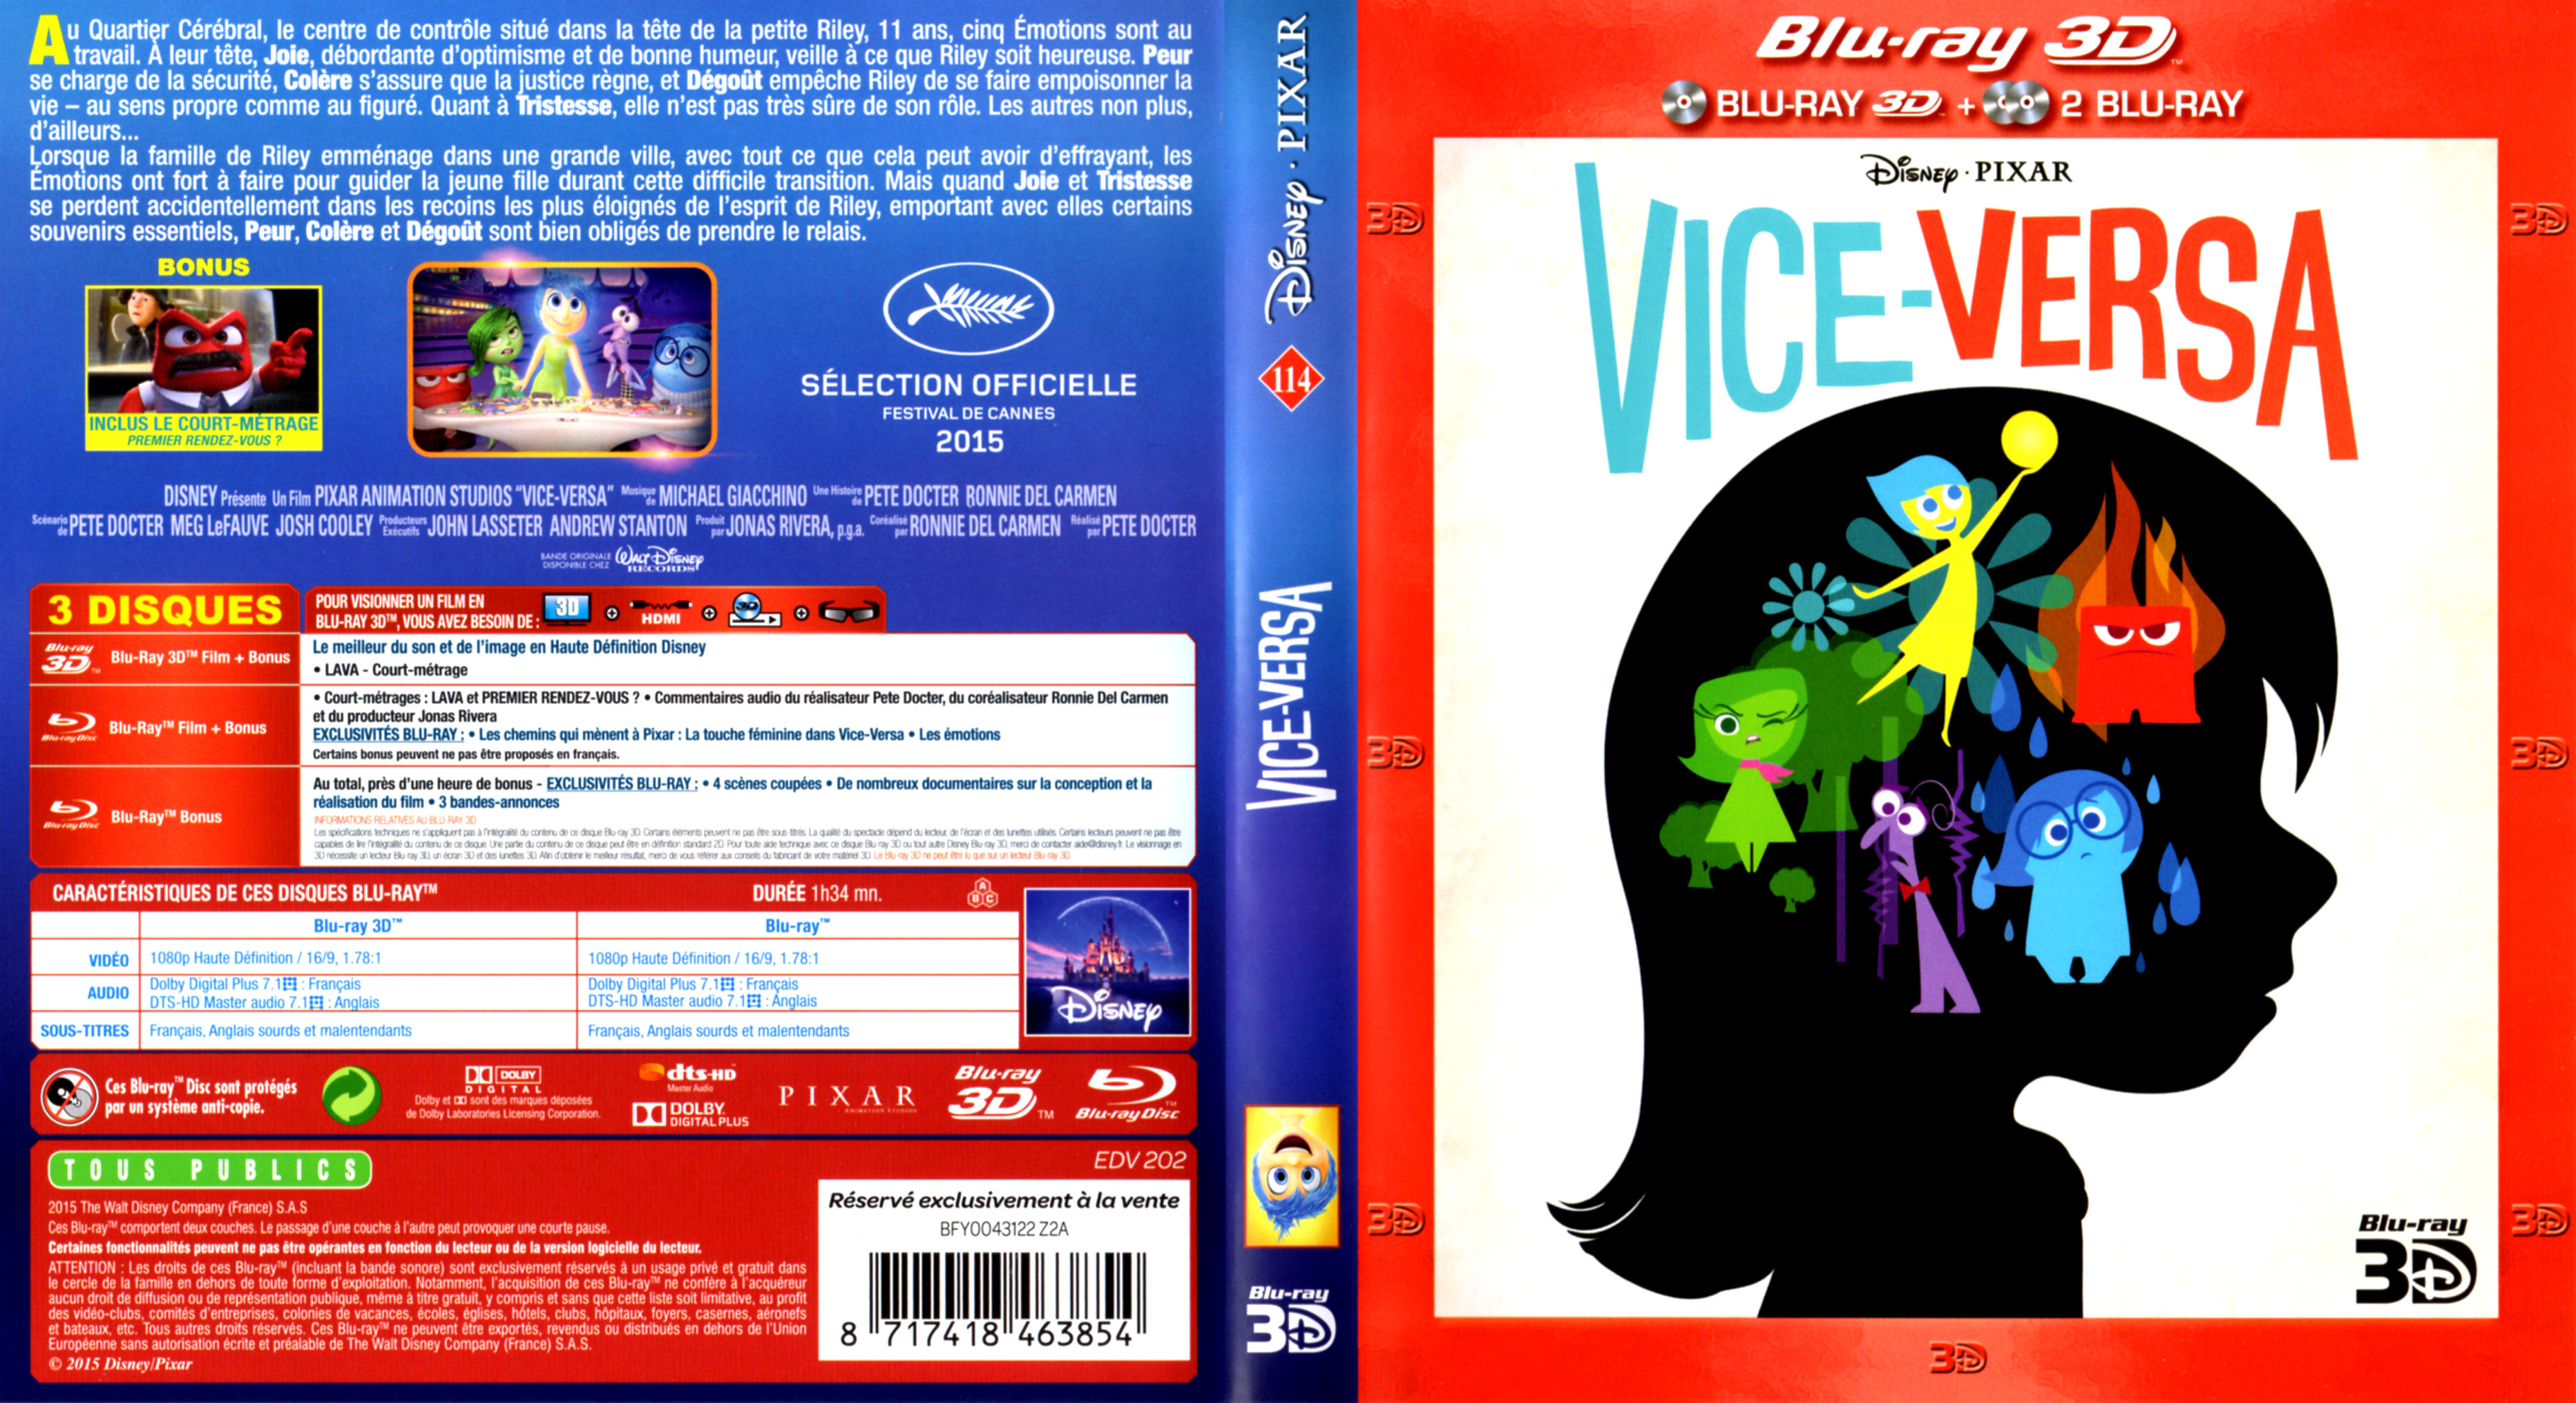 Jaquette DVD Vice Versa 3D (BLU-RAY)